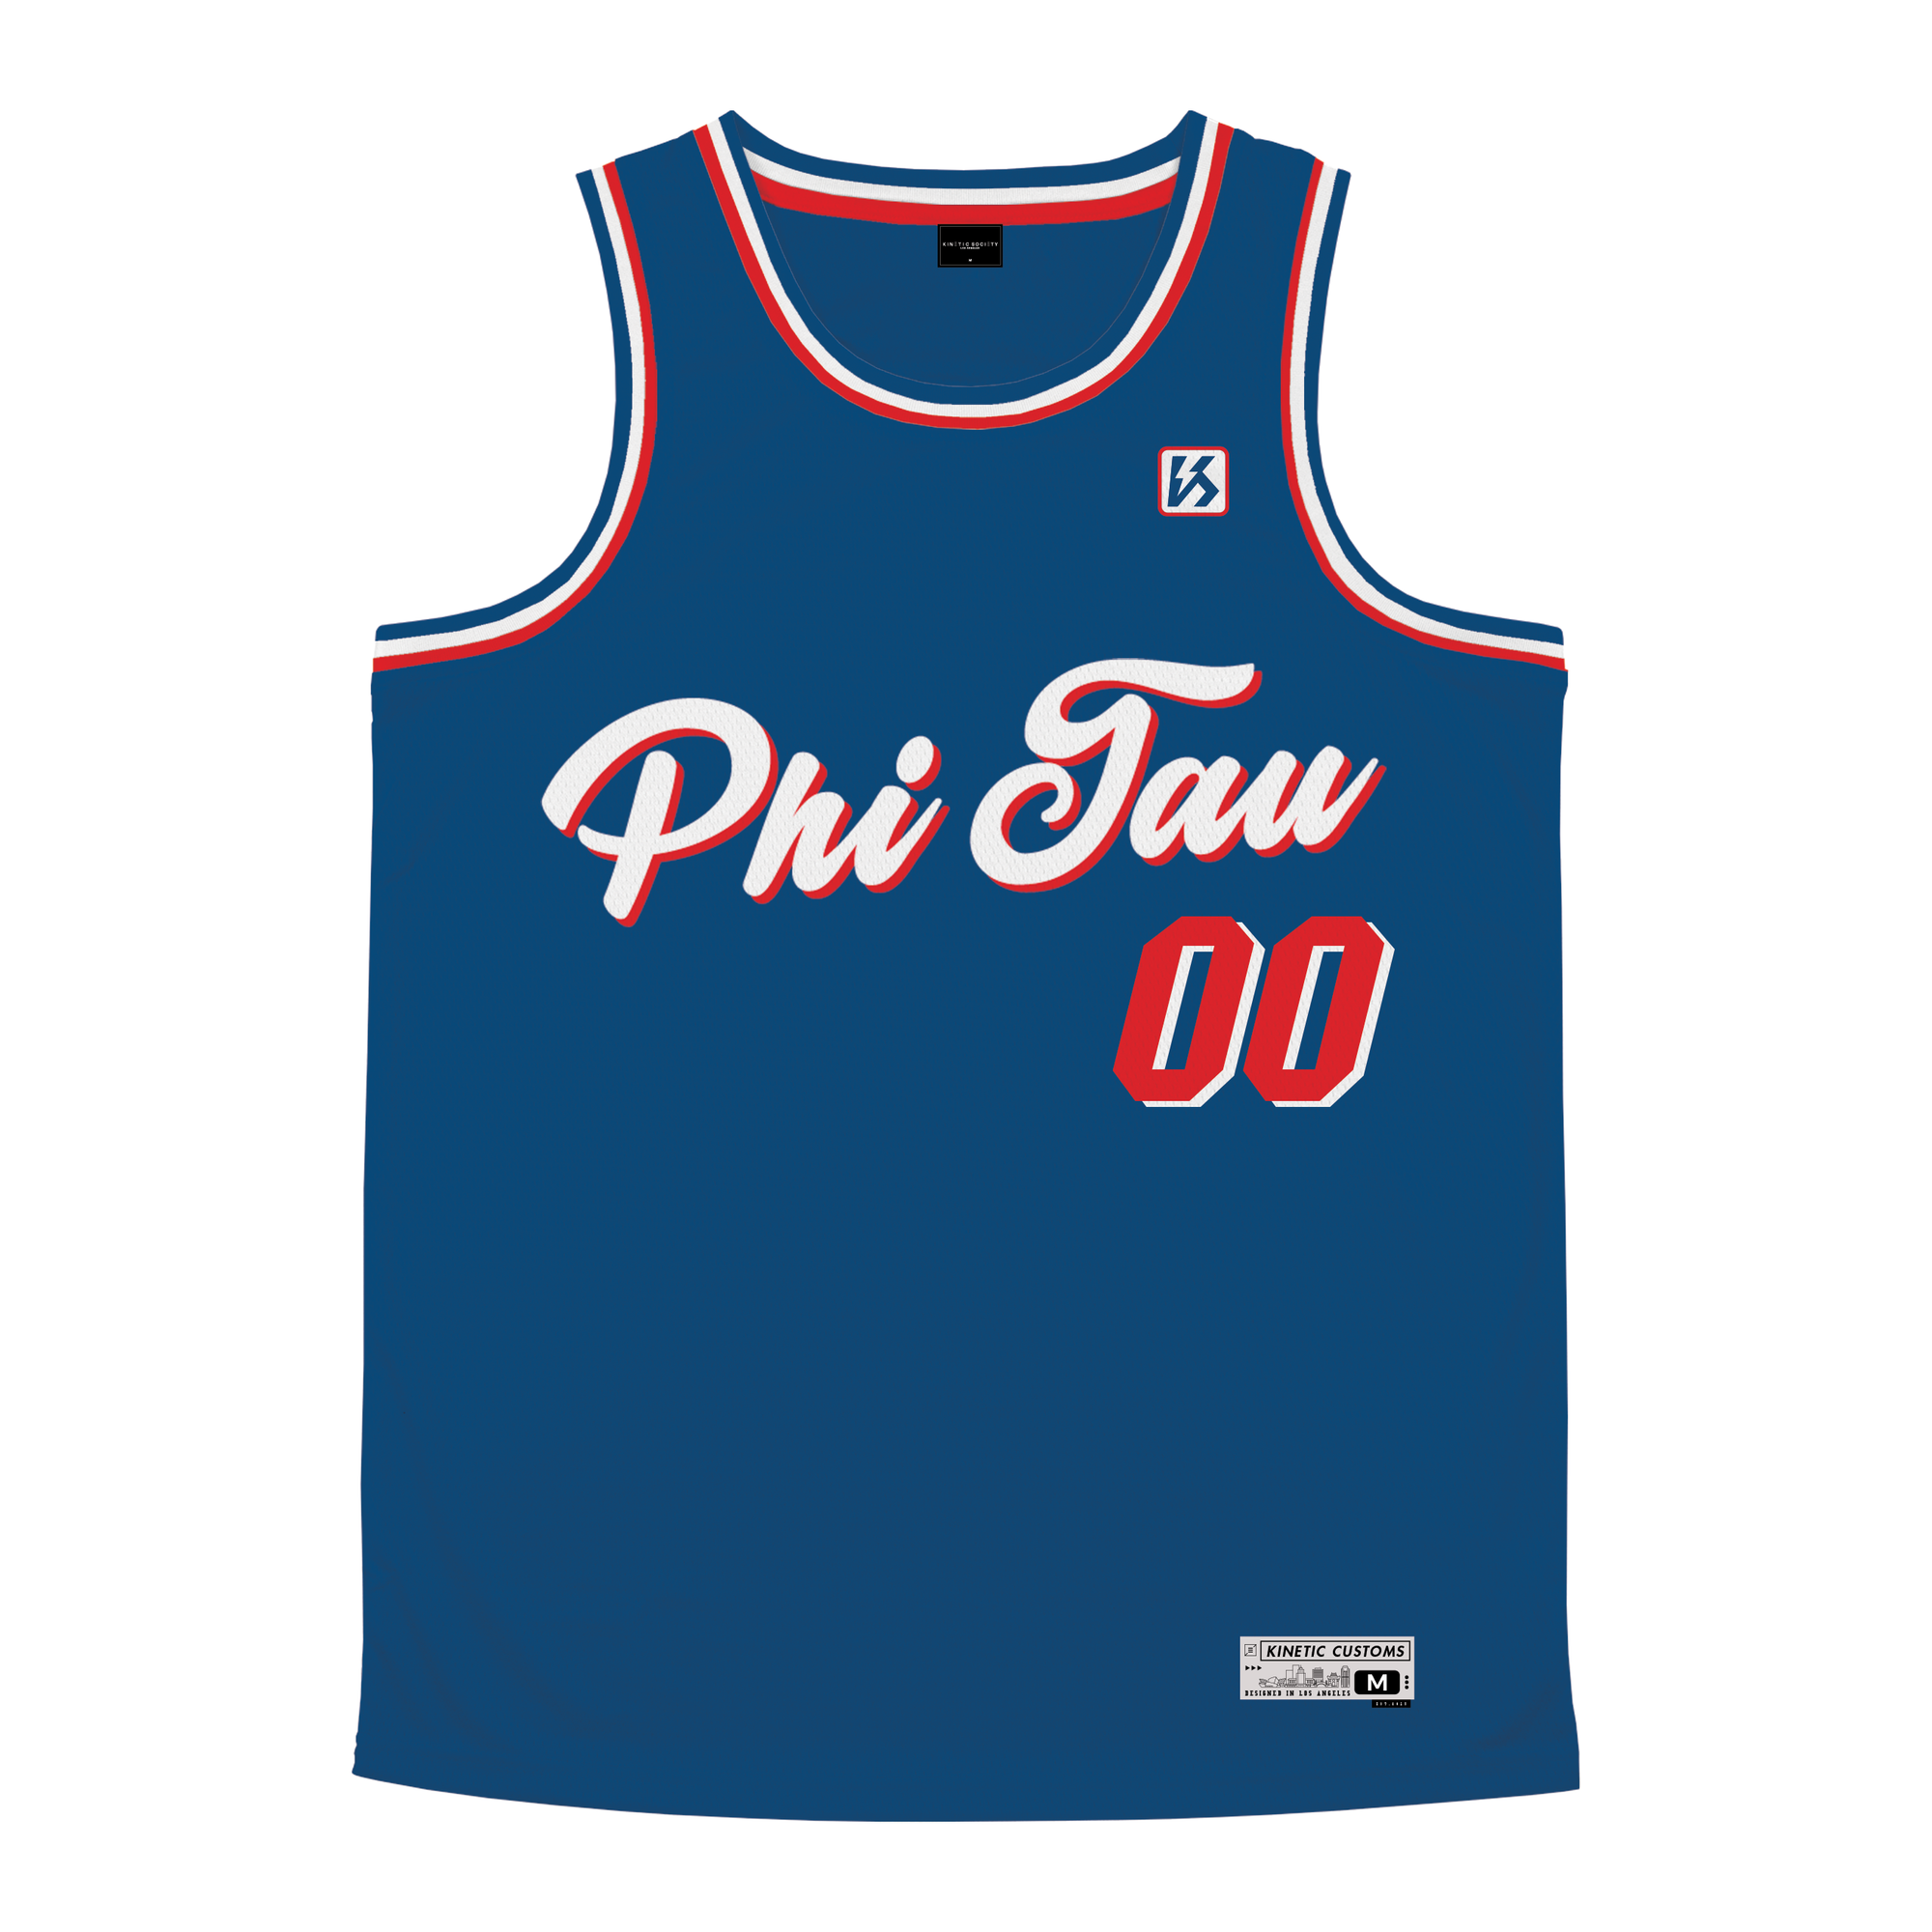 Phi Kappa Tau - The Dream Basketball Jersey